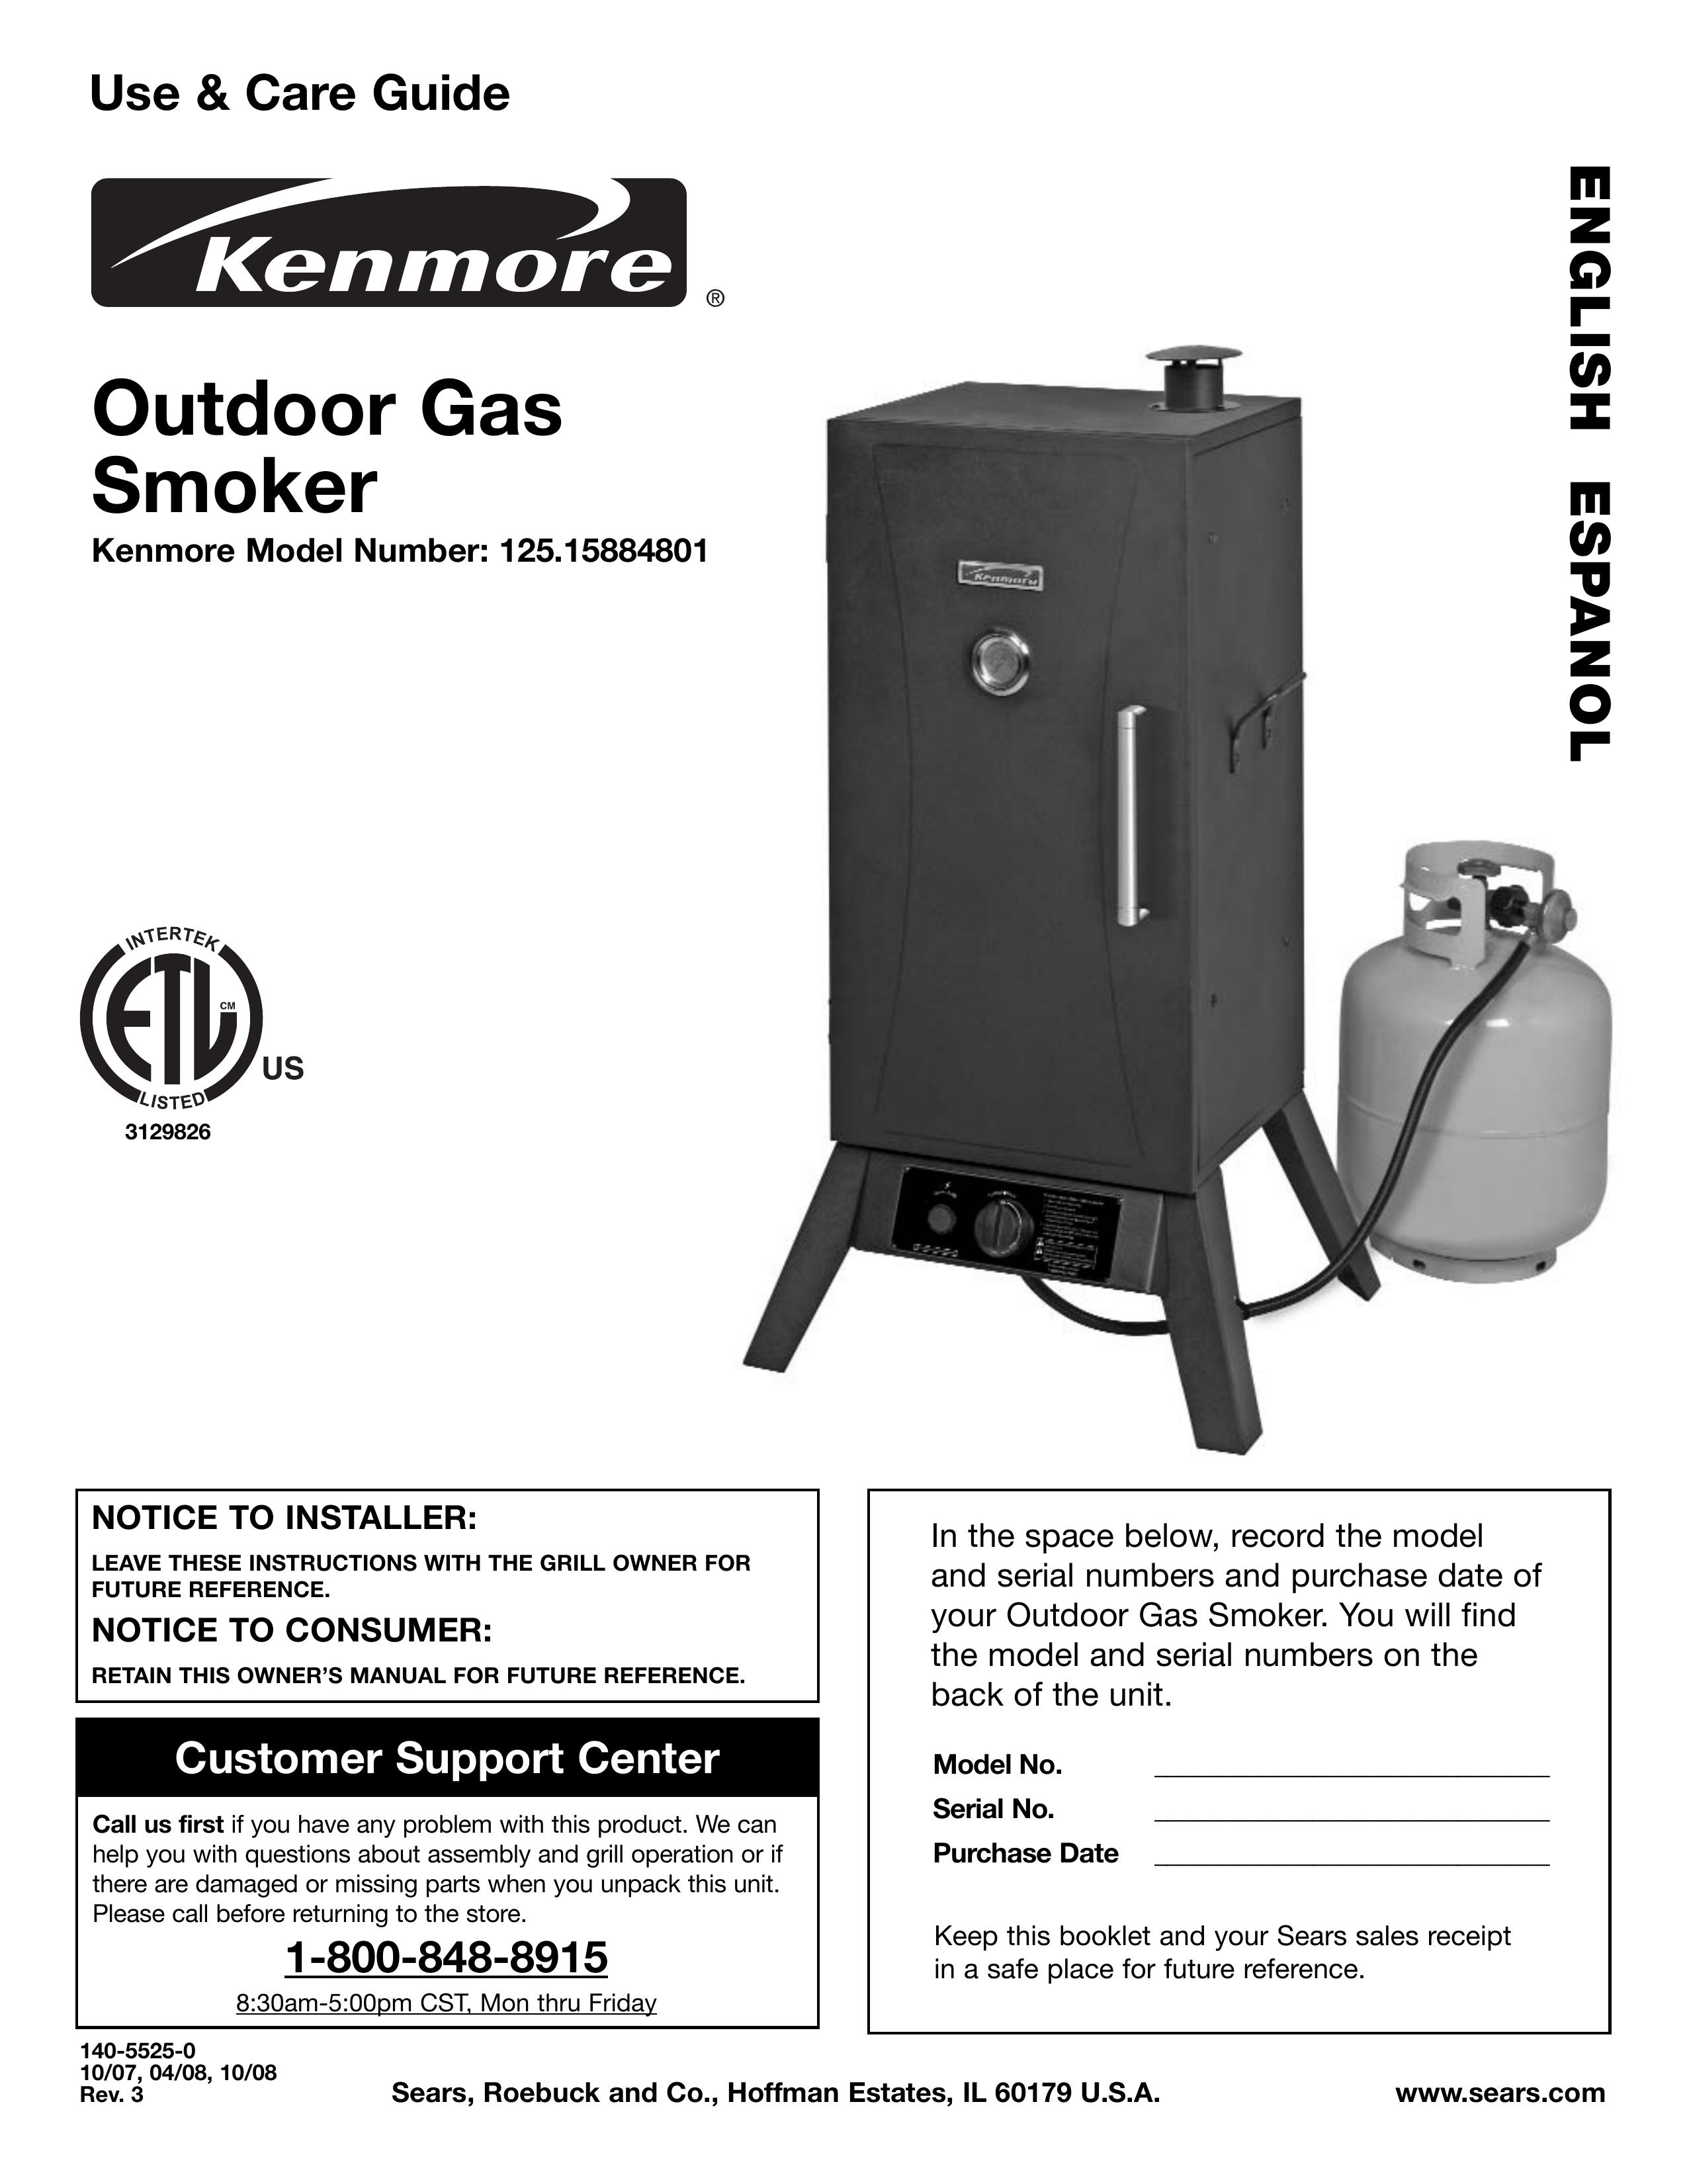 Kenmore 125.15884801 Smoker User Manual